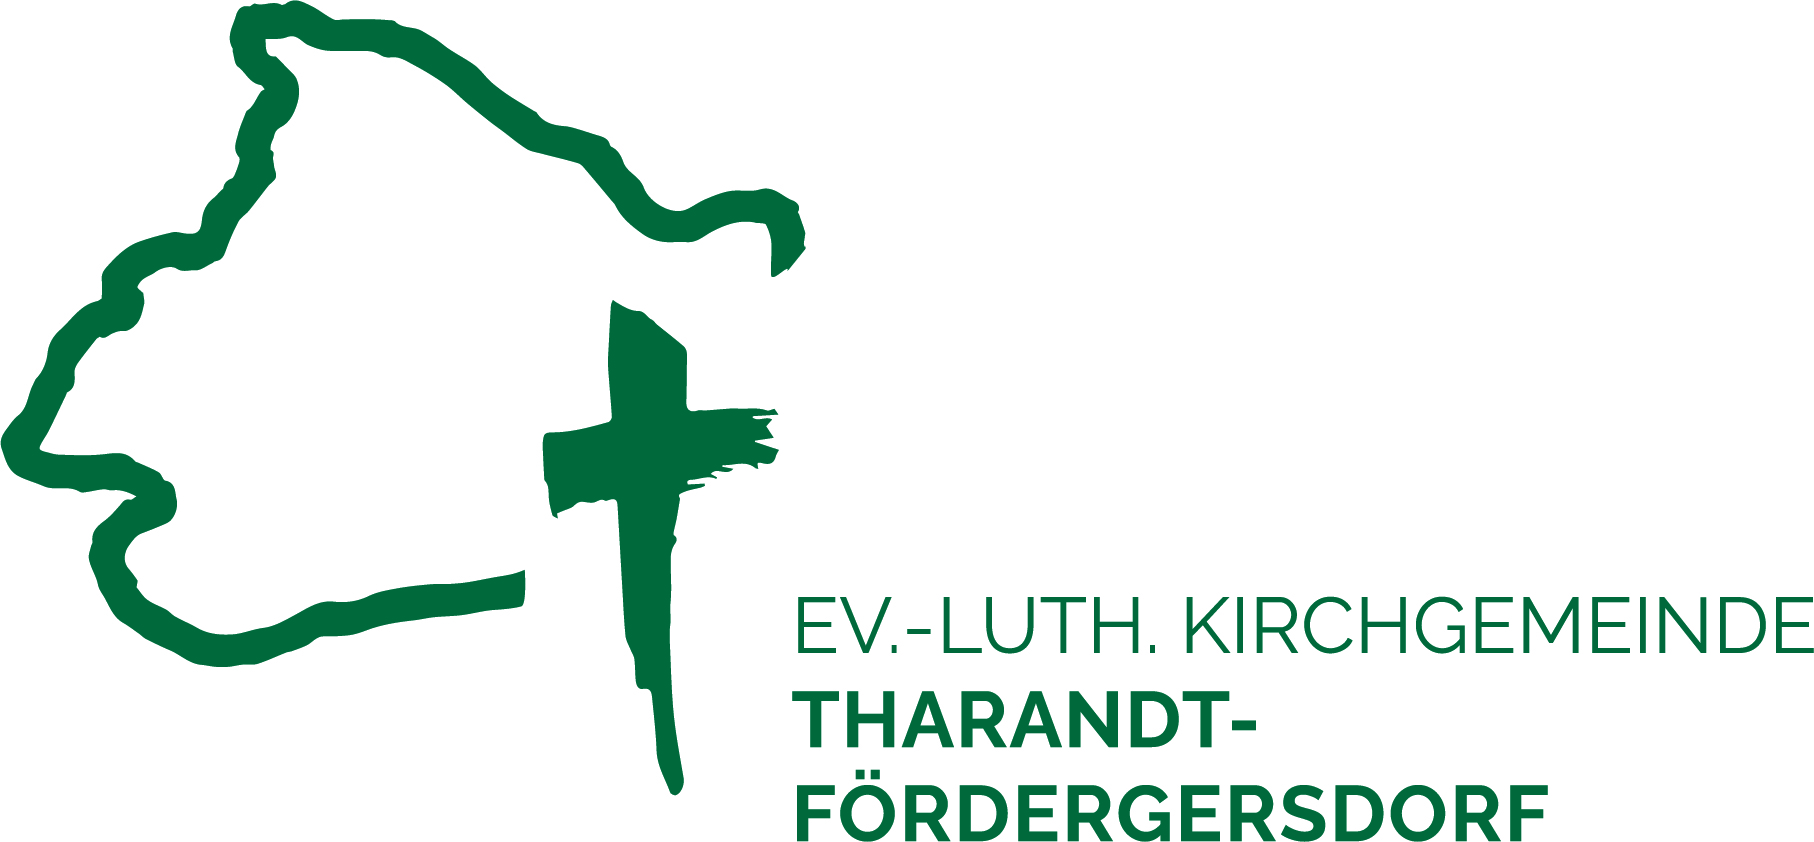 Kirchgemeinde Tharandt-Fördergersdorf